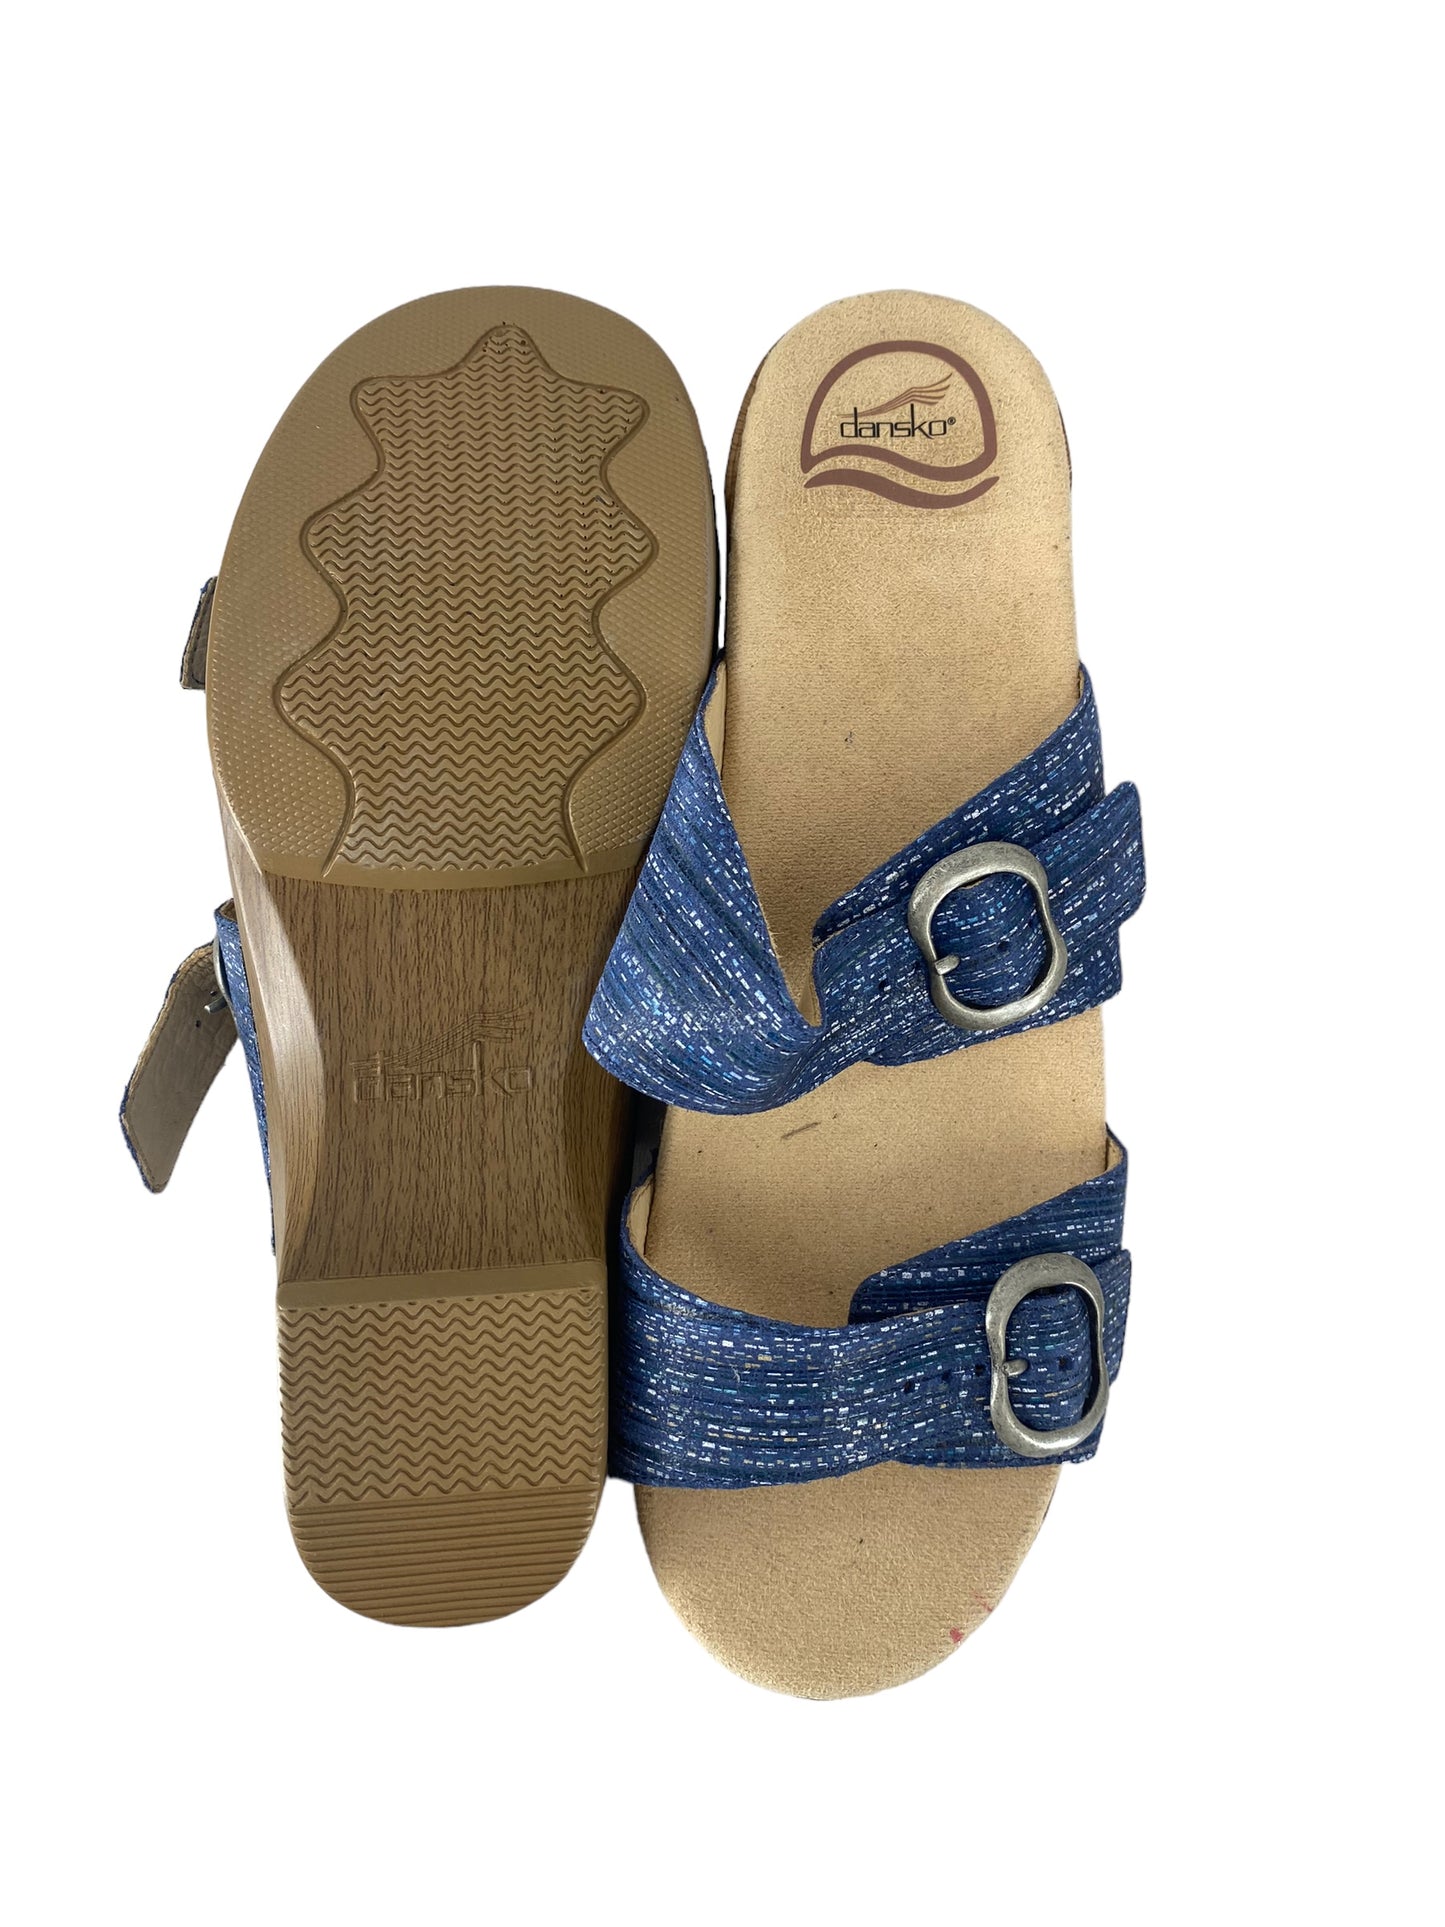 Sandals Heels Wedge By Dansko  Size: 10